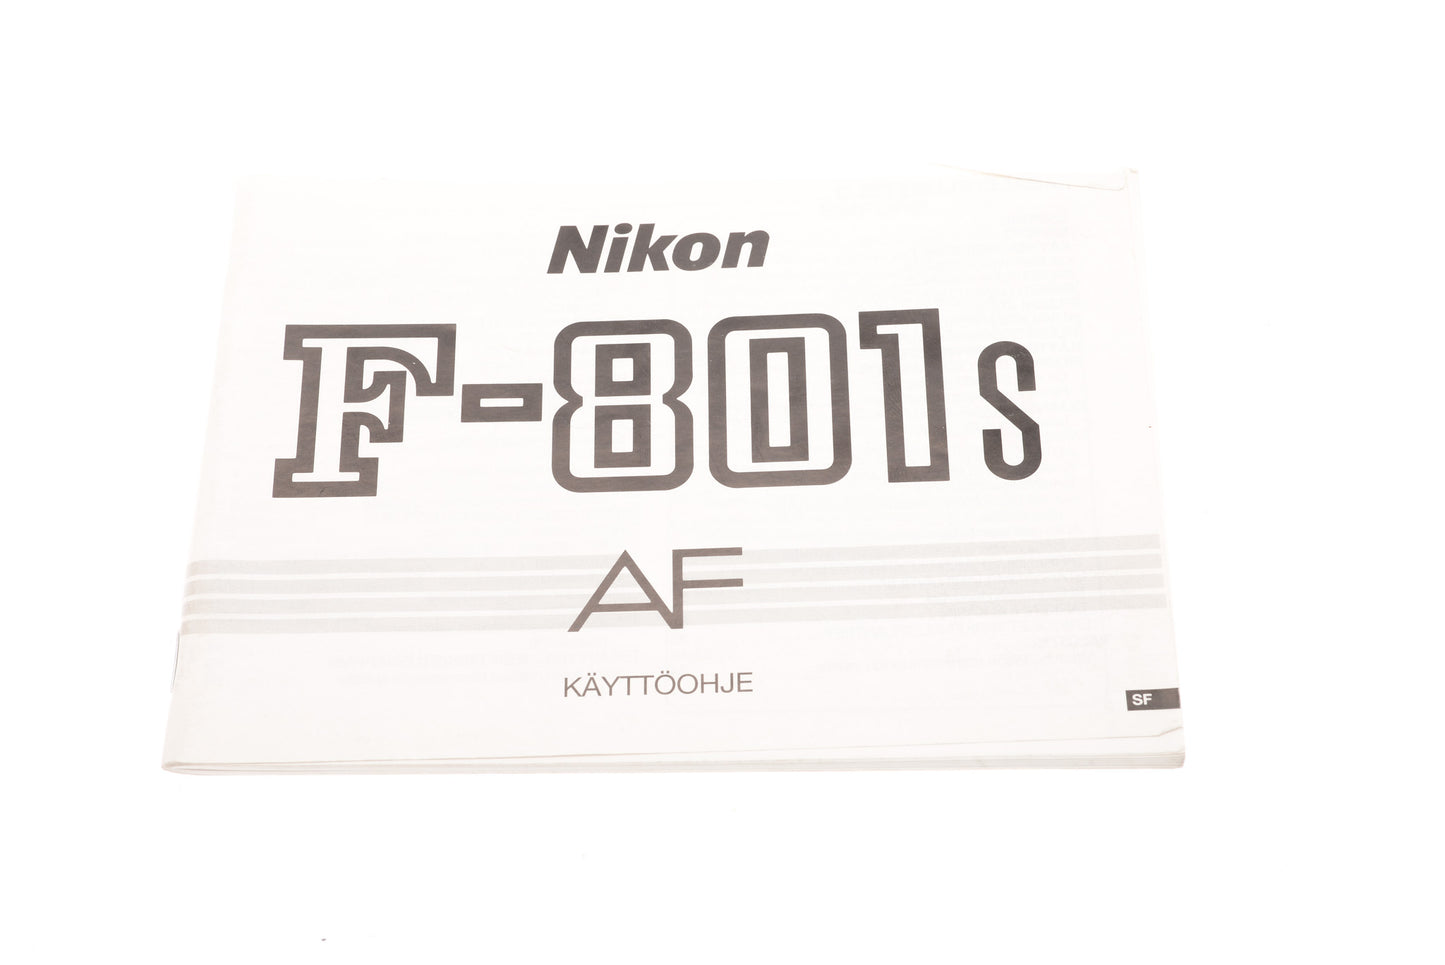 Nikon F-801s AF Instructions - Accessory